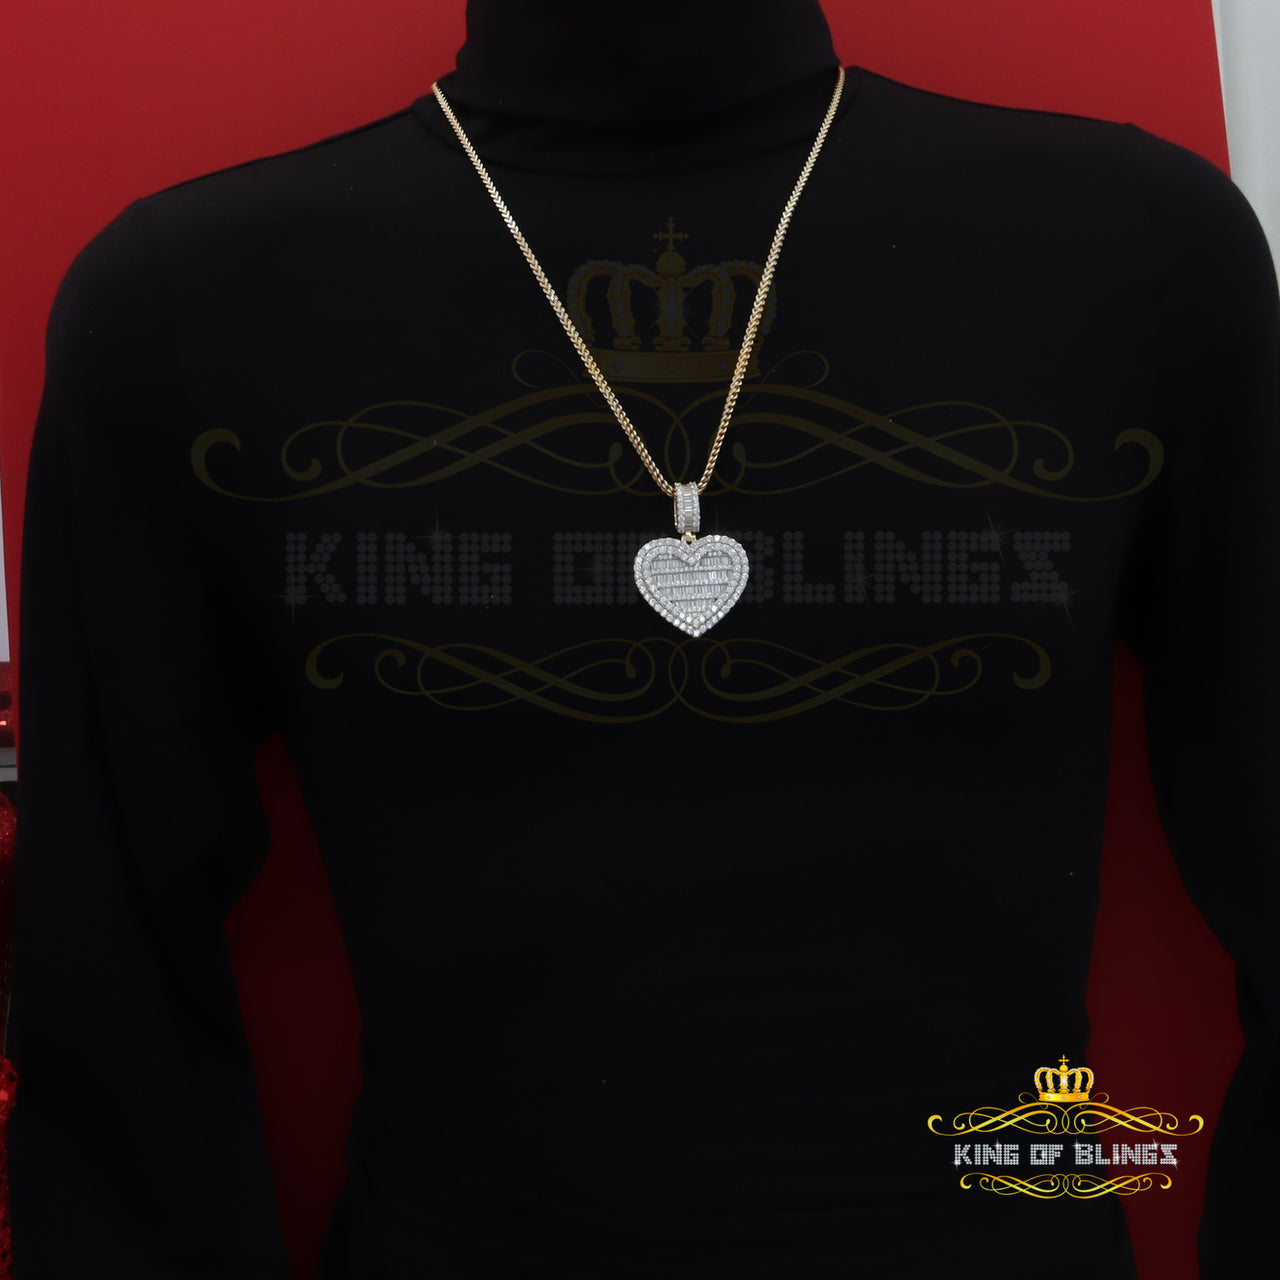 King Of Bling's Big 15.74ct Cubic Zirconia Baguette Silver Beautiful Yellow Heart Shape Pendant KING OF BLINGS